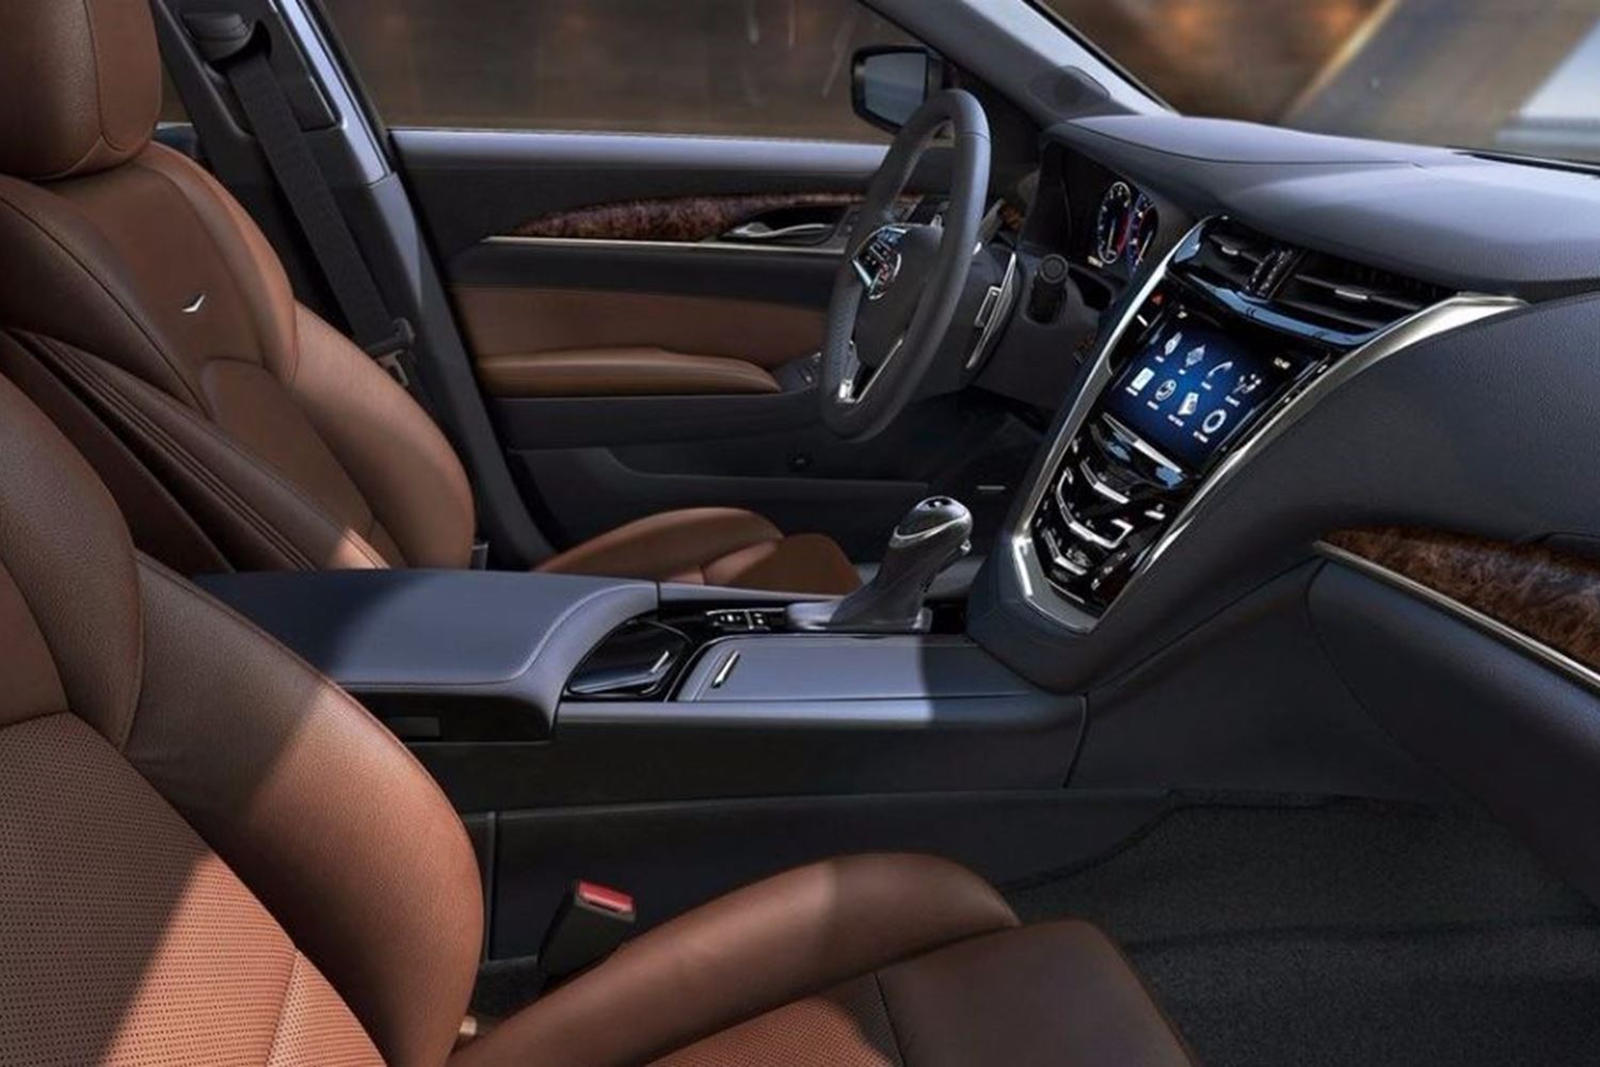 2017 Cadillac CTS Sedan Interior Photos | CarBuzz